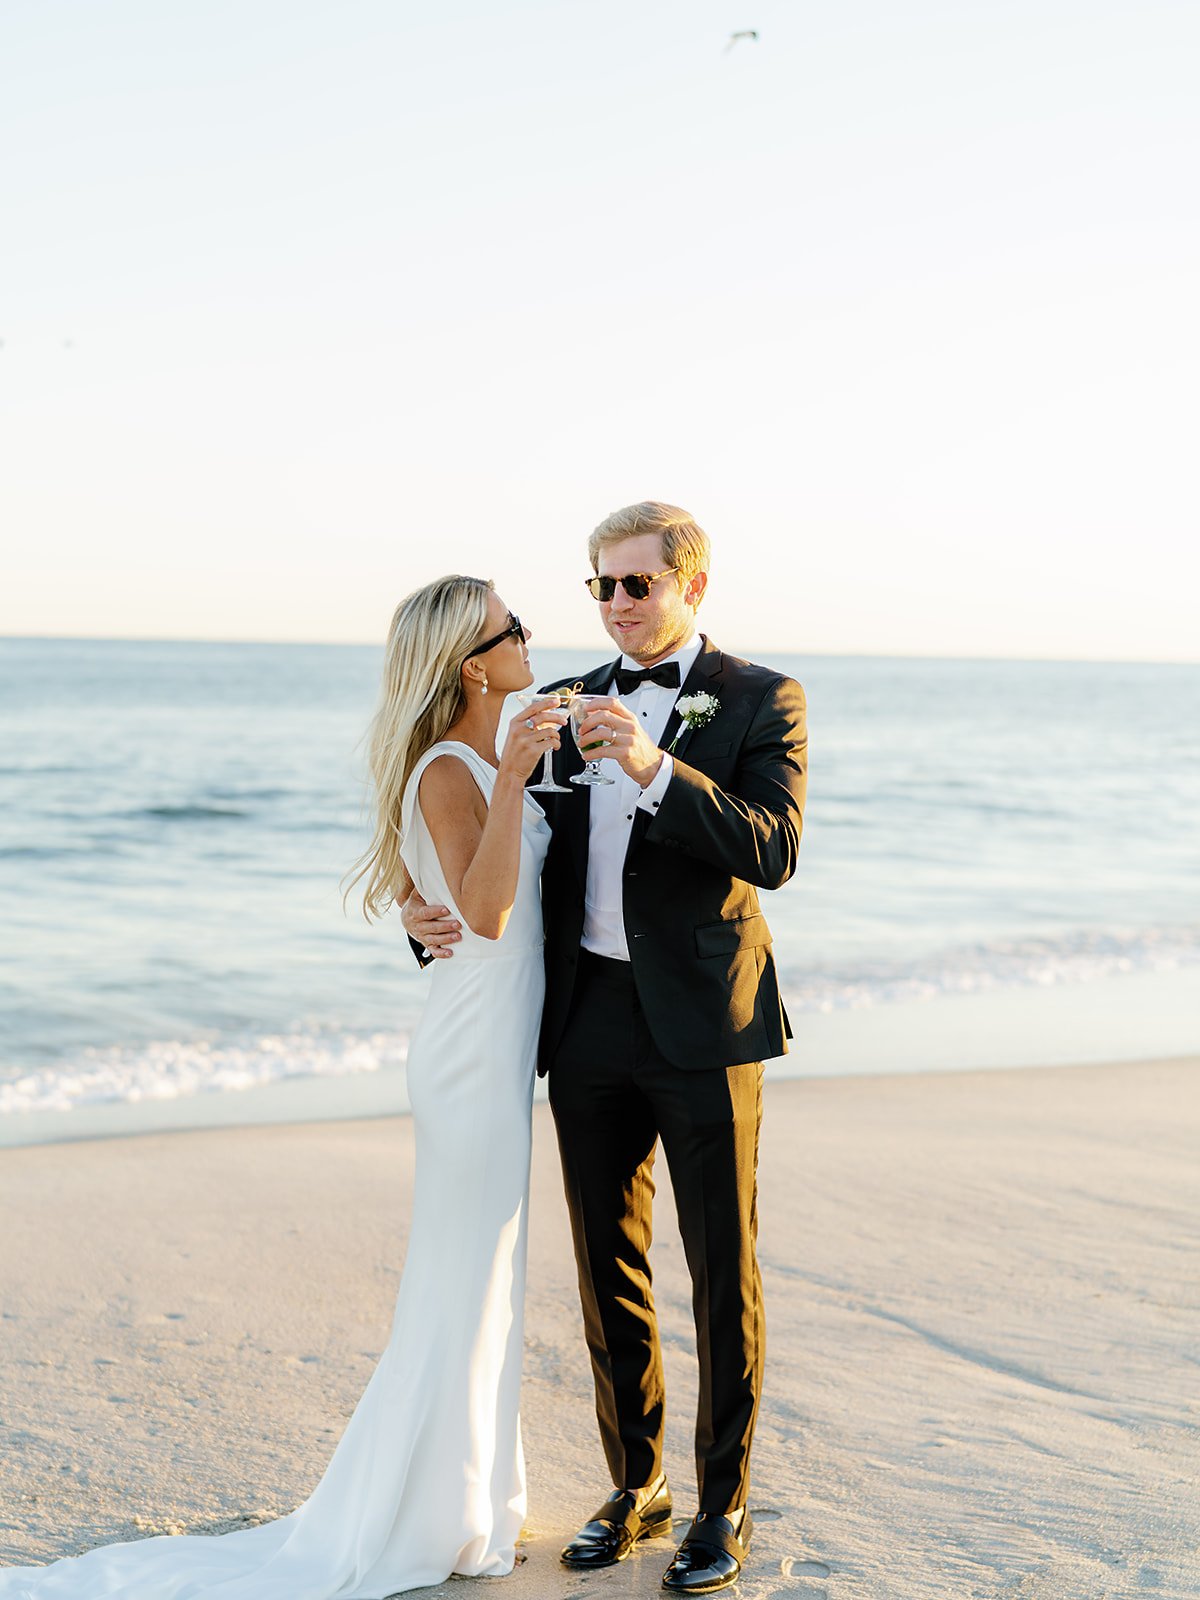 wedding-beach-martini.jpg